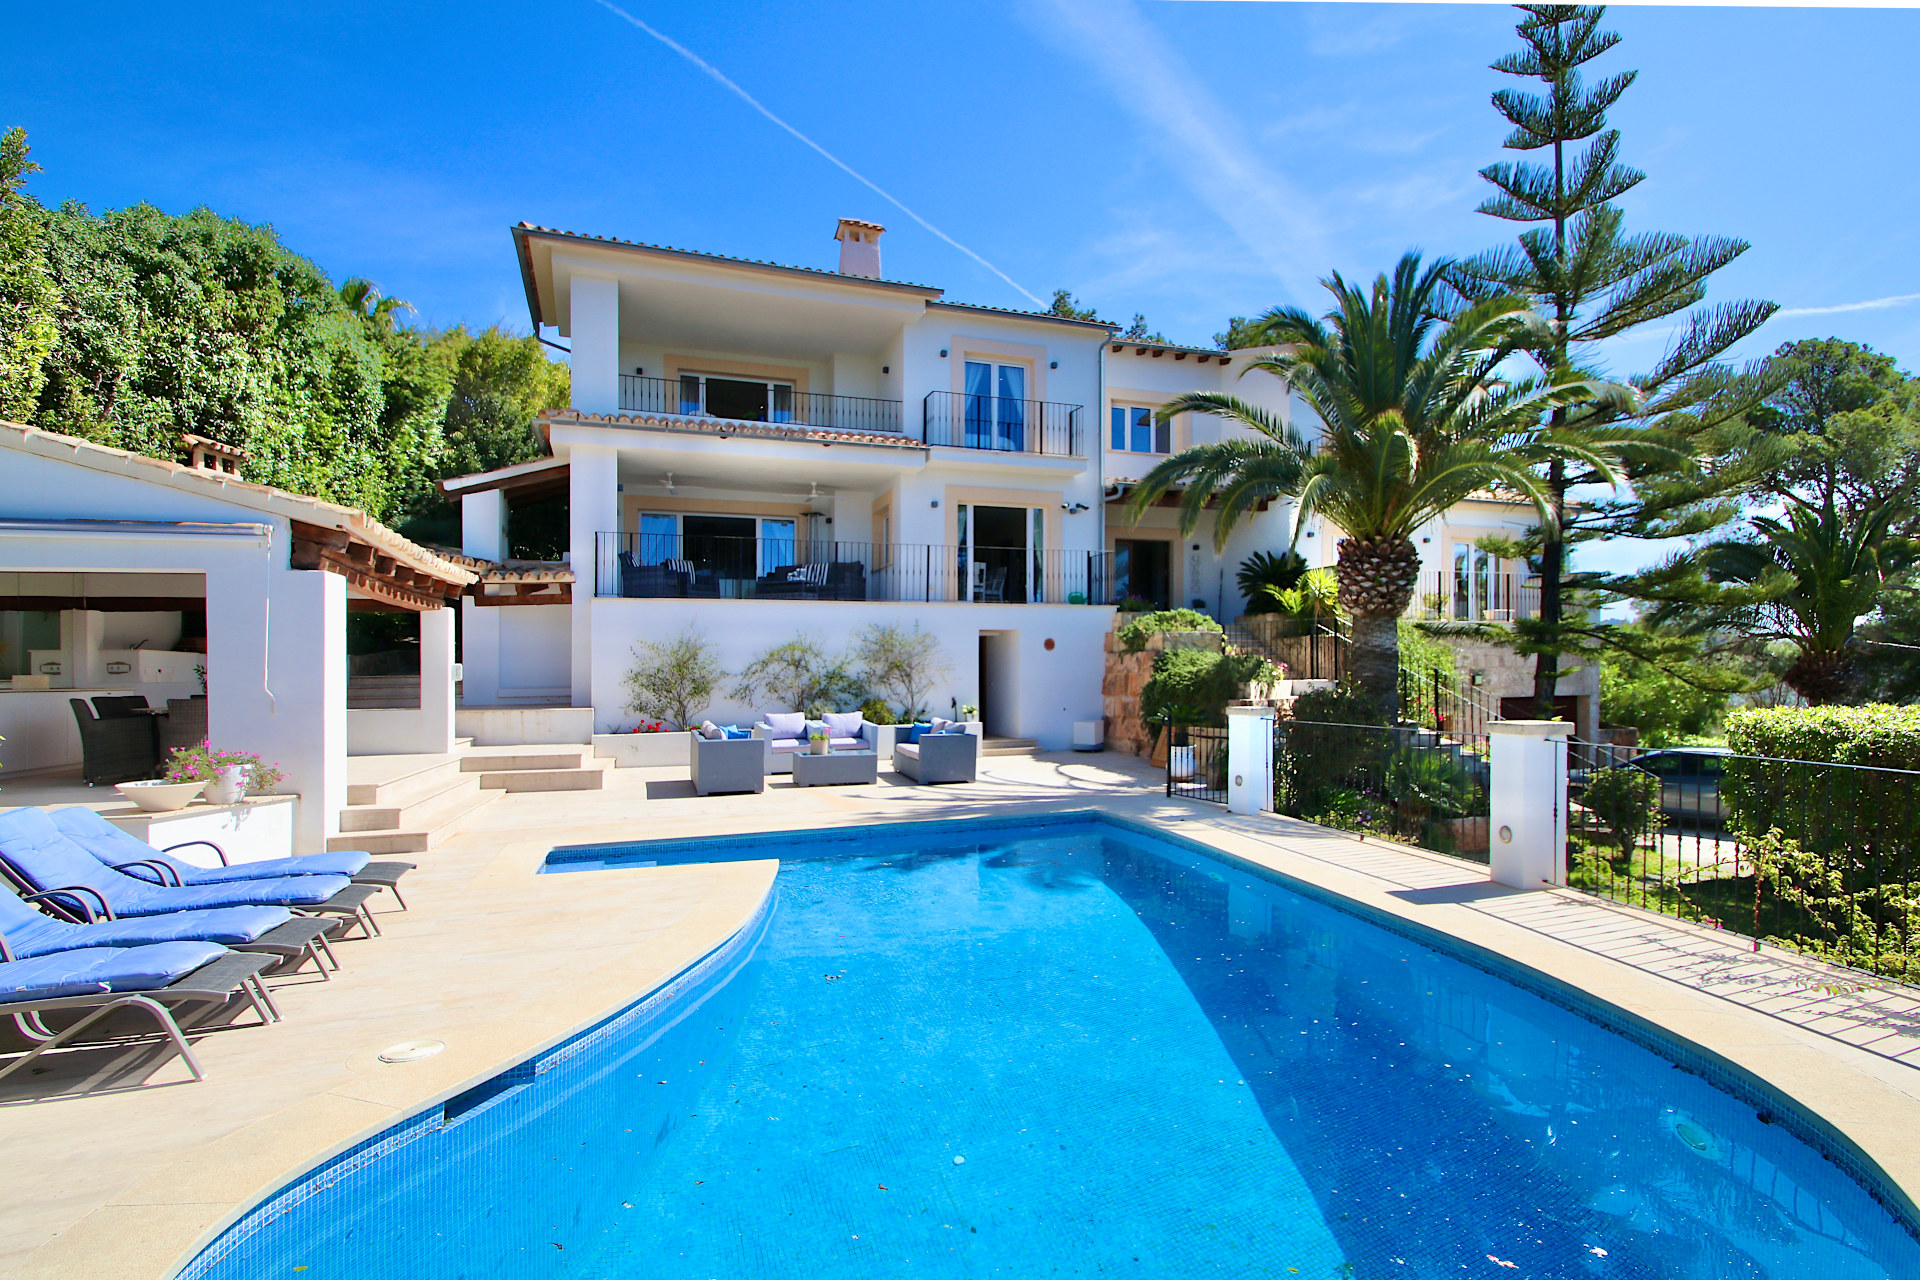 Spacious 4 bedroom villa with sun terraces, pool, and panoramic sea views